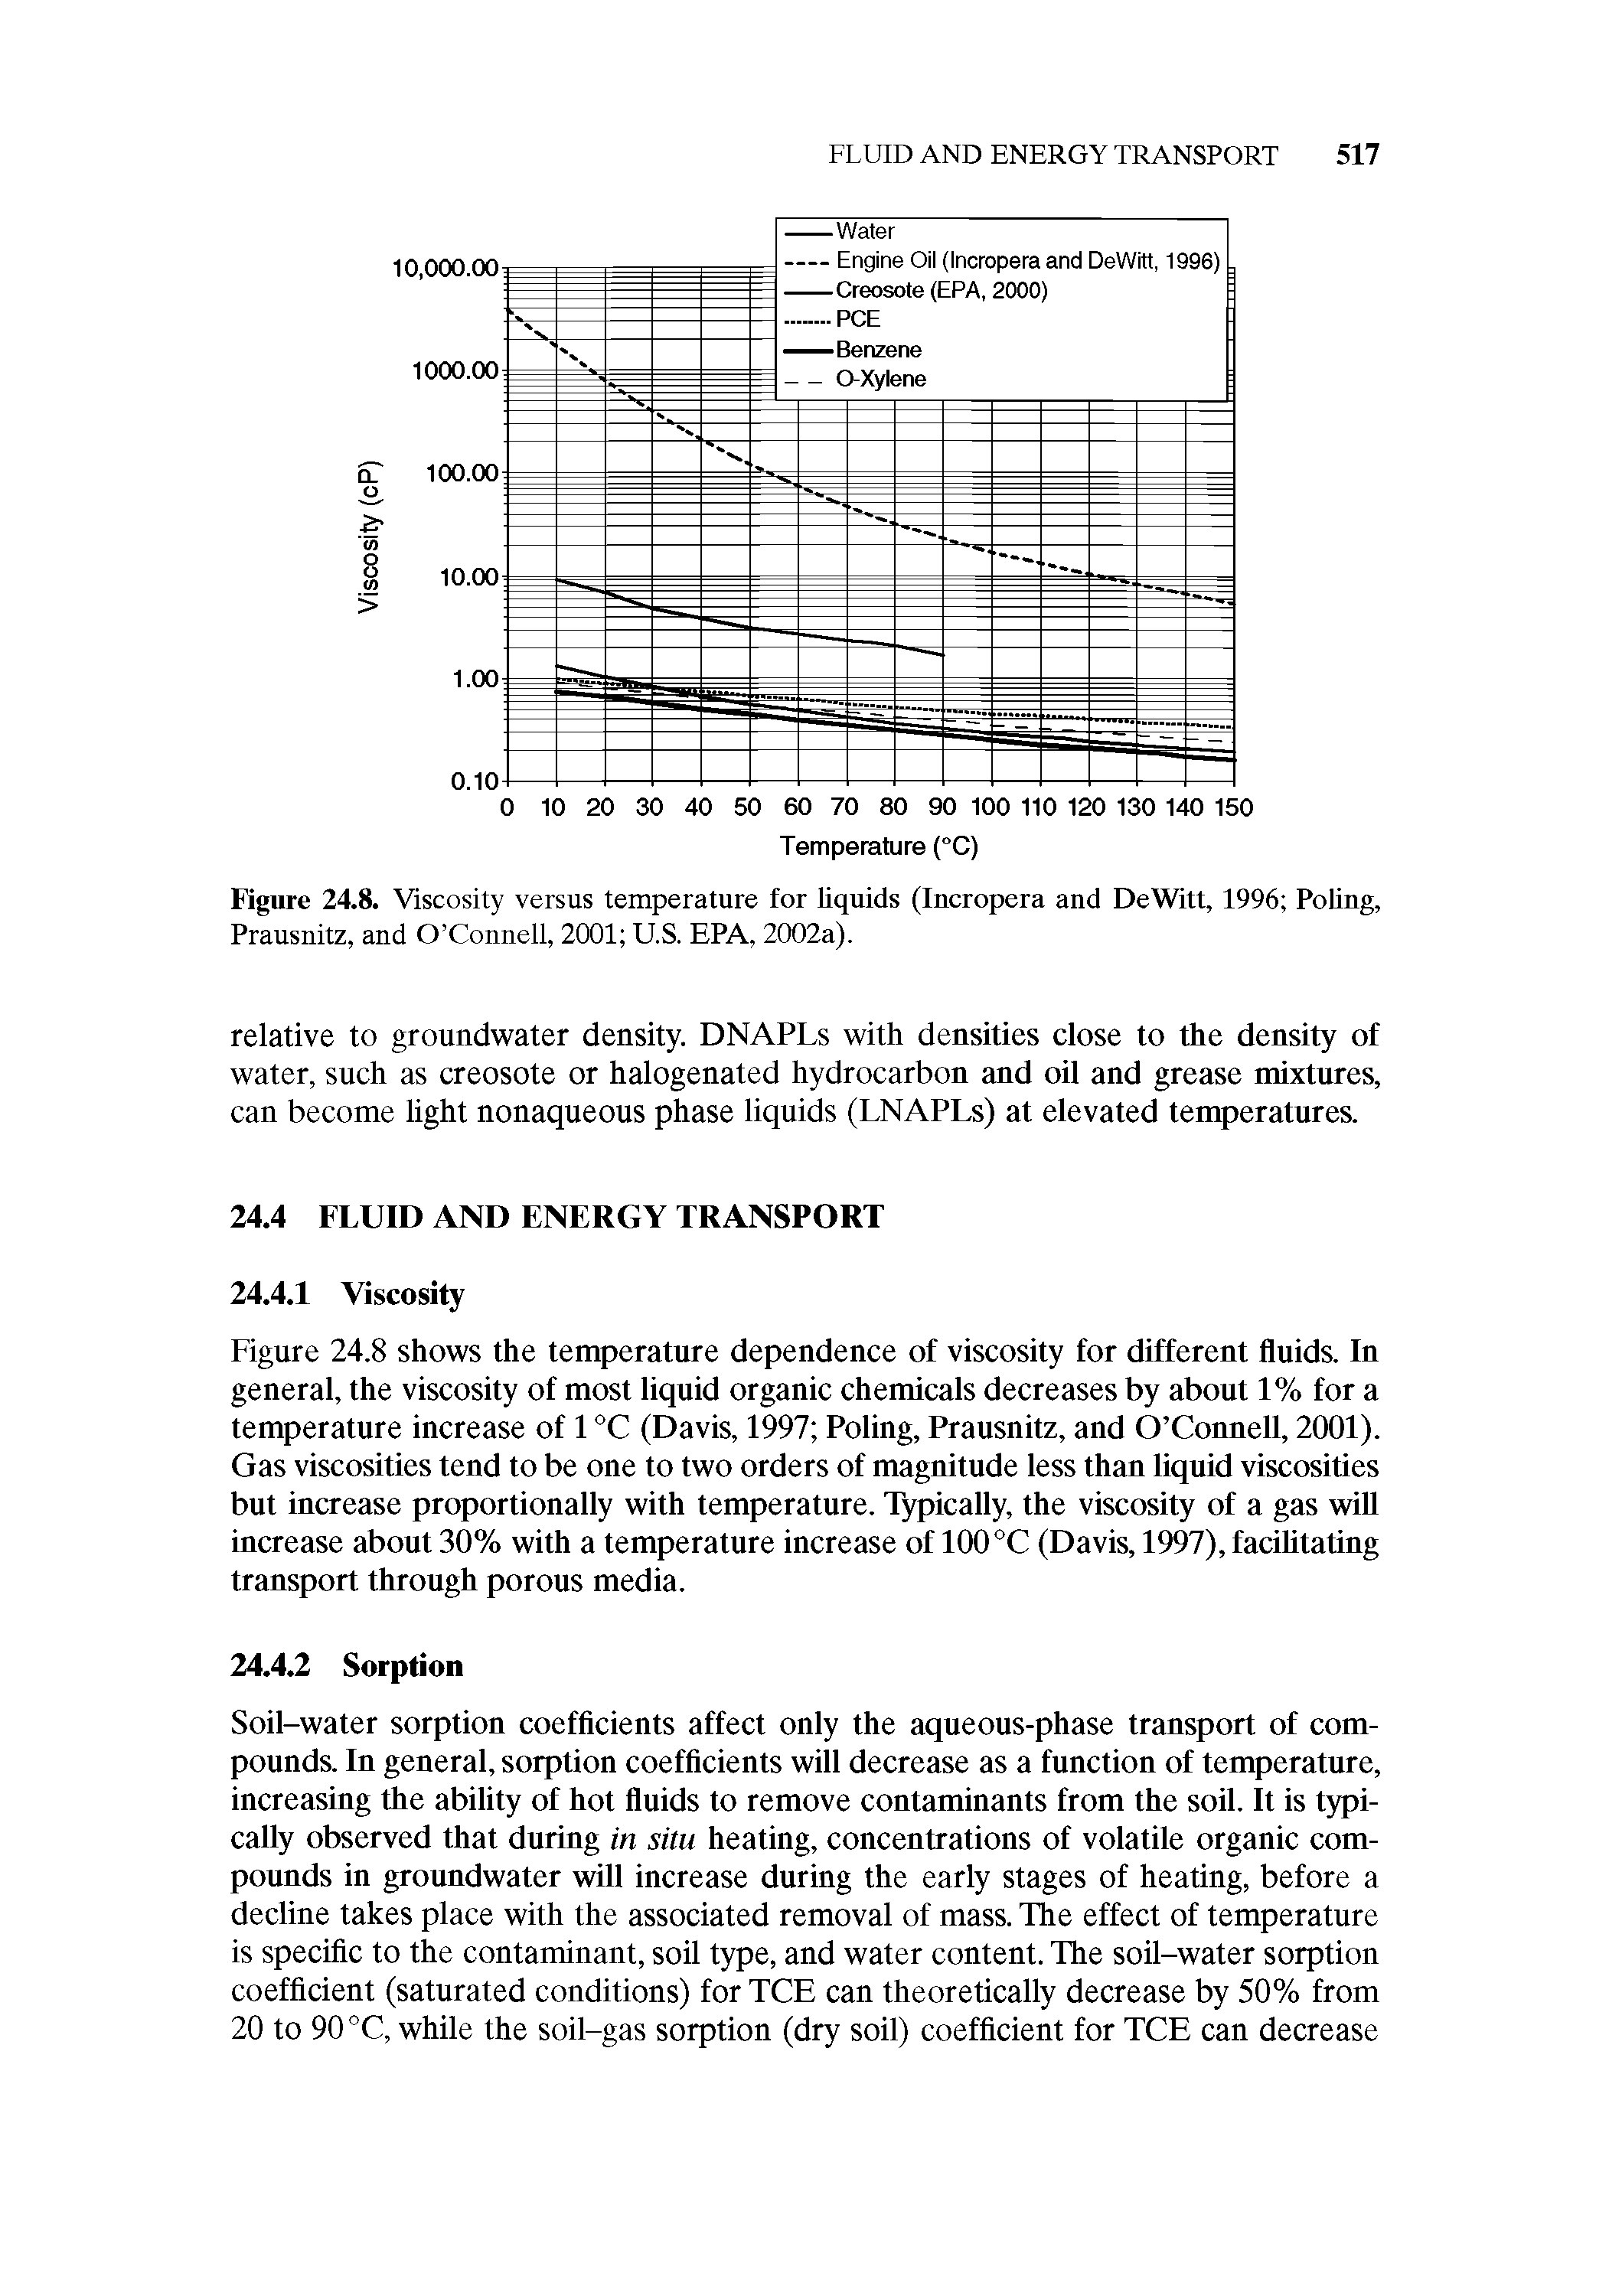 Figure 24.8. Viscosity versus temperature for liquids (Incropera and DeWitt, 1996 Poling, Prausnitz, and O Connell, 2001 U.S. EPA, 2002a).